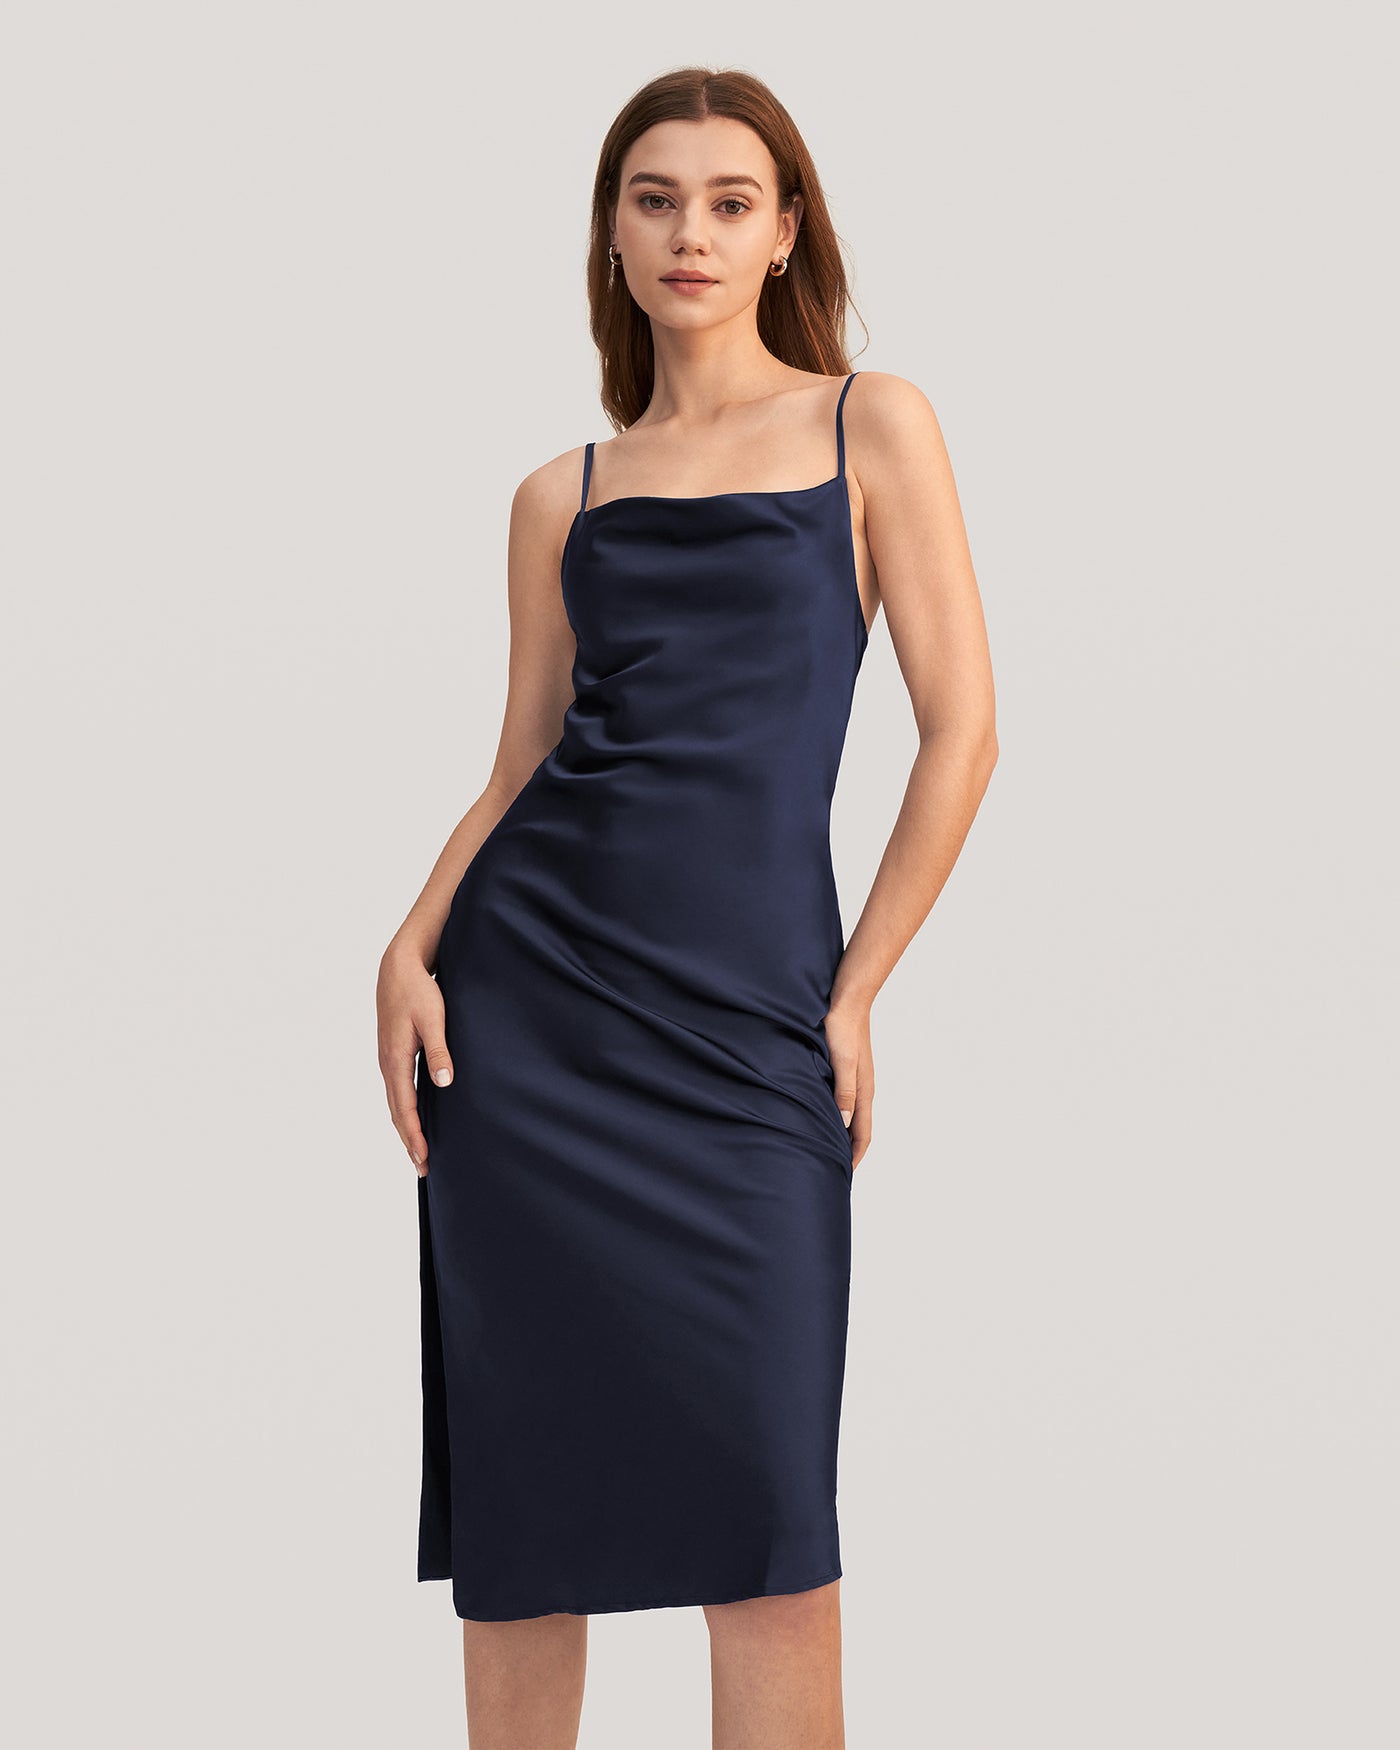 Elegant Alluring Cowl Neck Silk Slip Dress